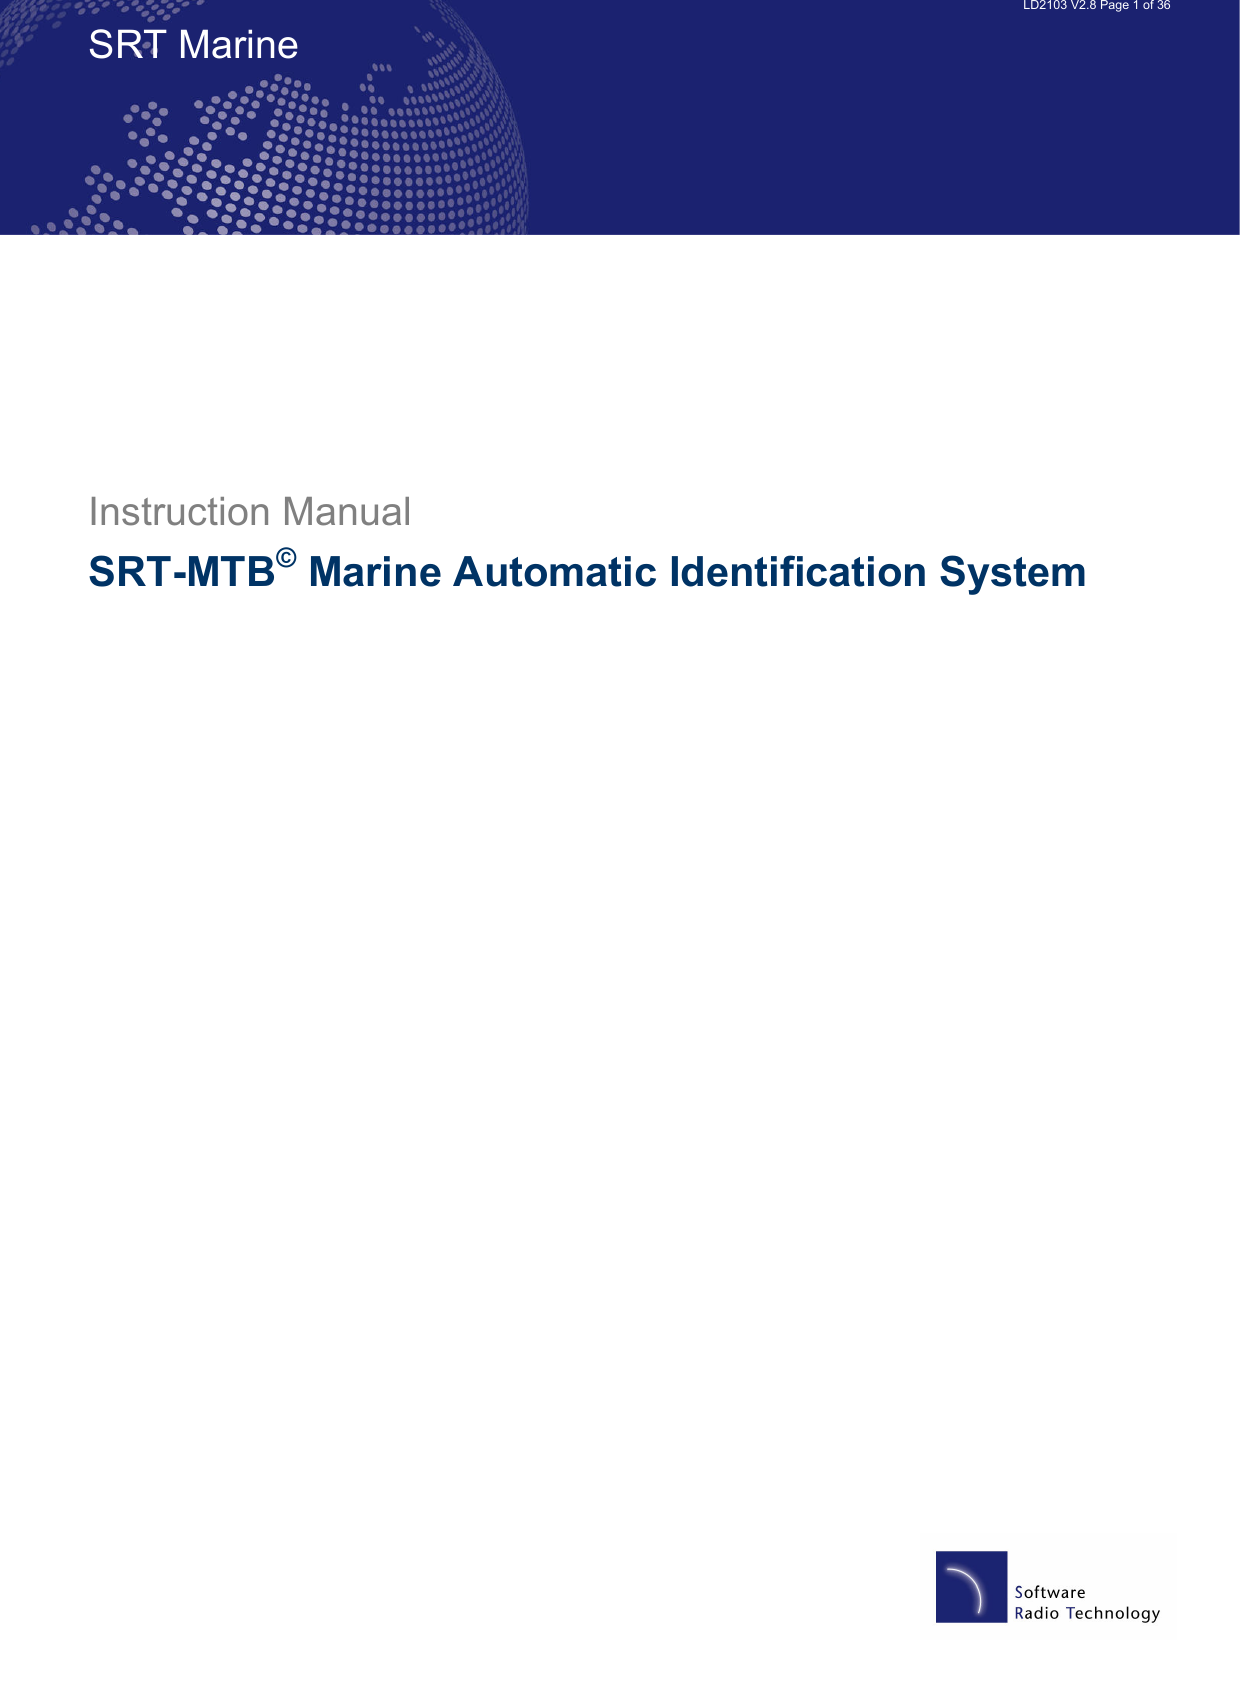   LD2103 V2.8 Page 1 of 36 SRT Marine        Instruction Manual SRT-MTB© Marine Automatic Identification System    